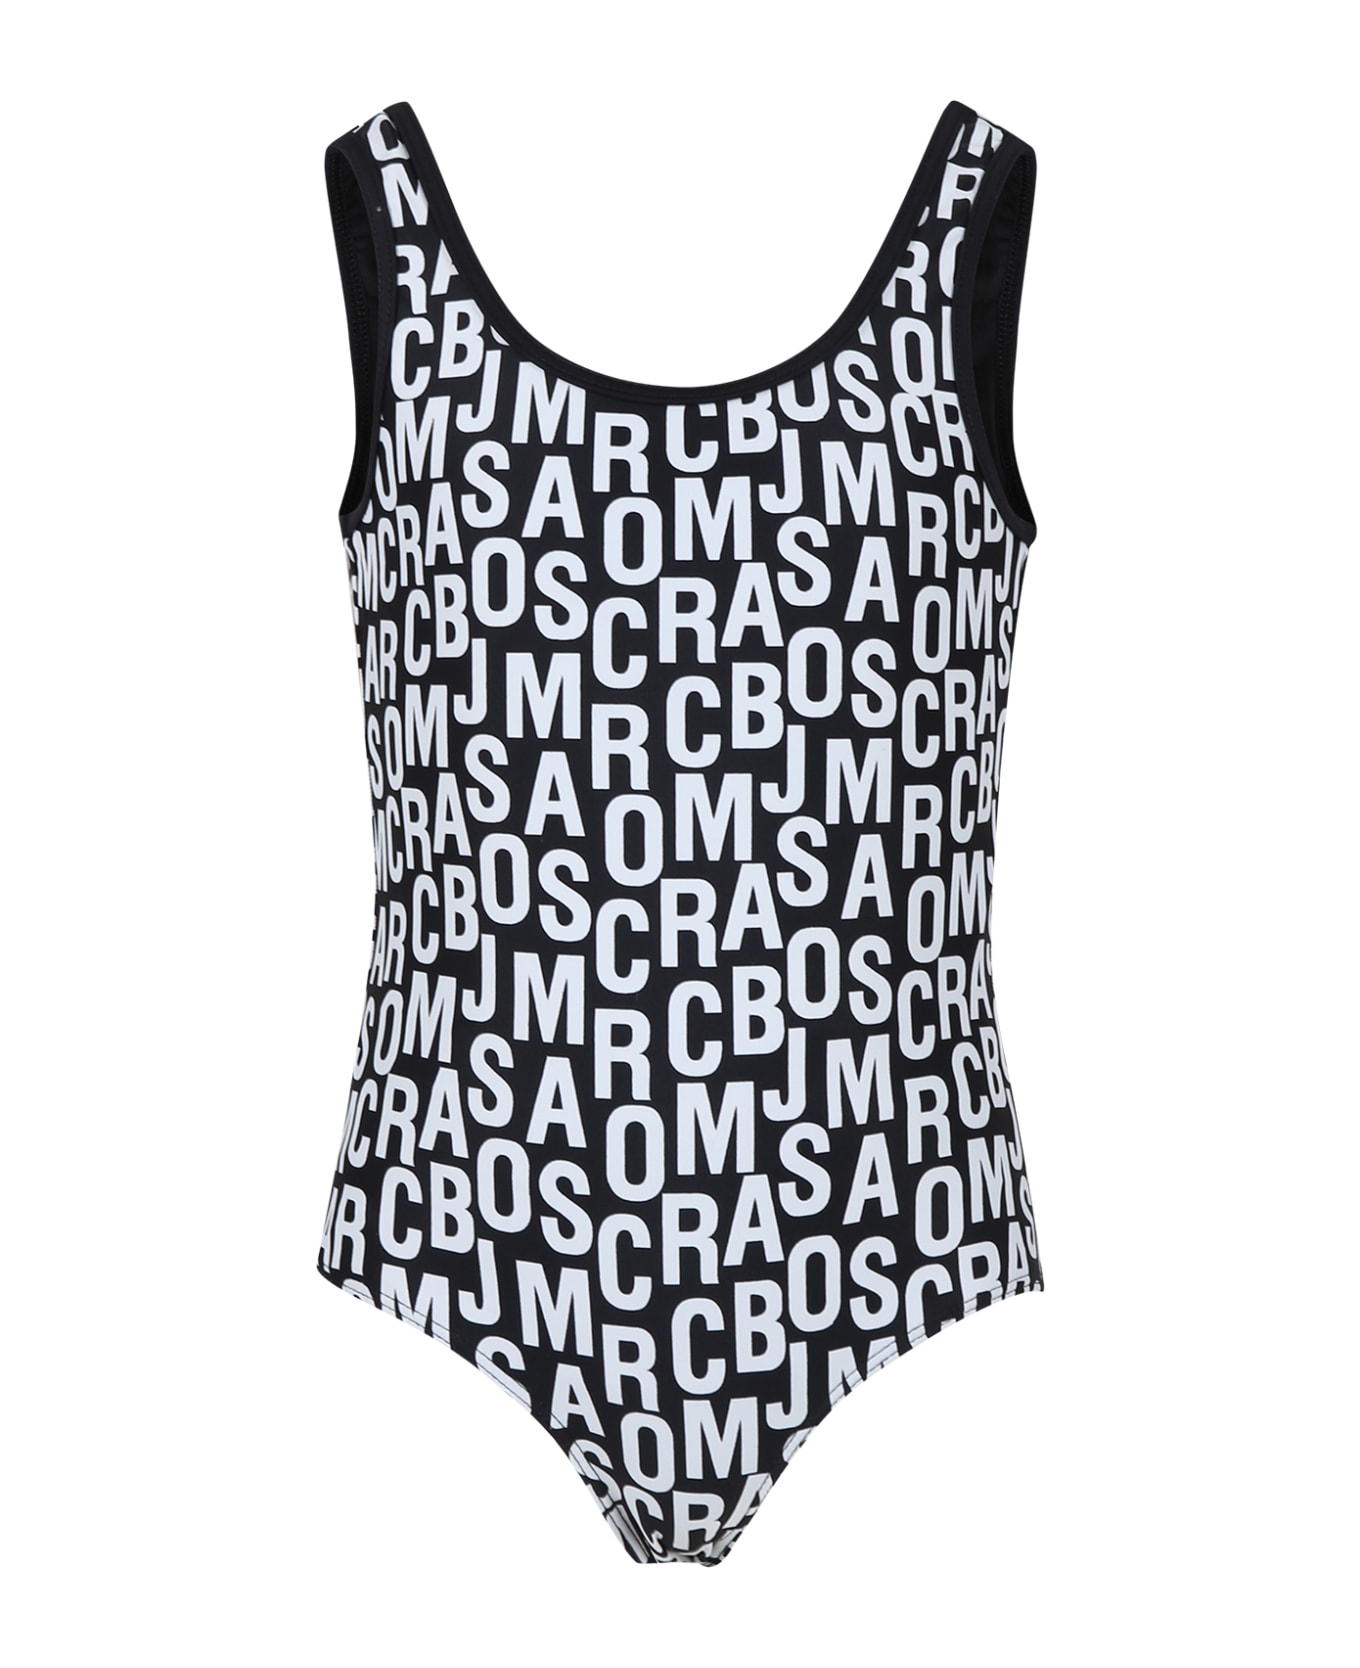 Little Marc Jacobs Black Swimsuit For Girl With Logo - Black 水着